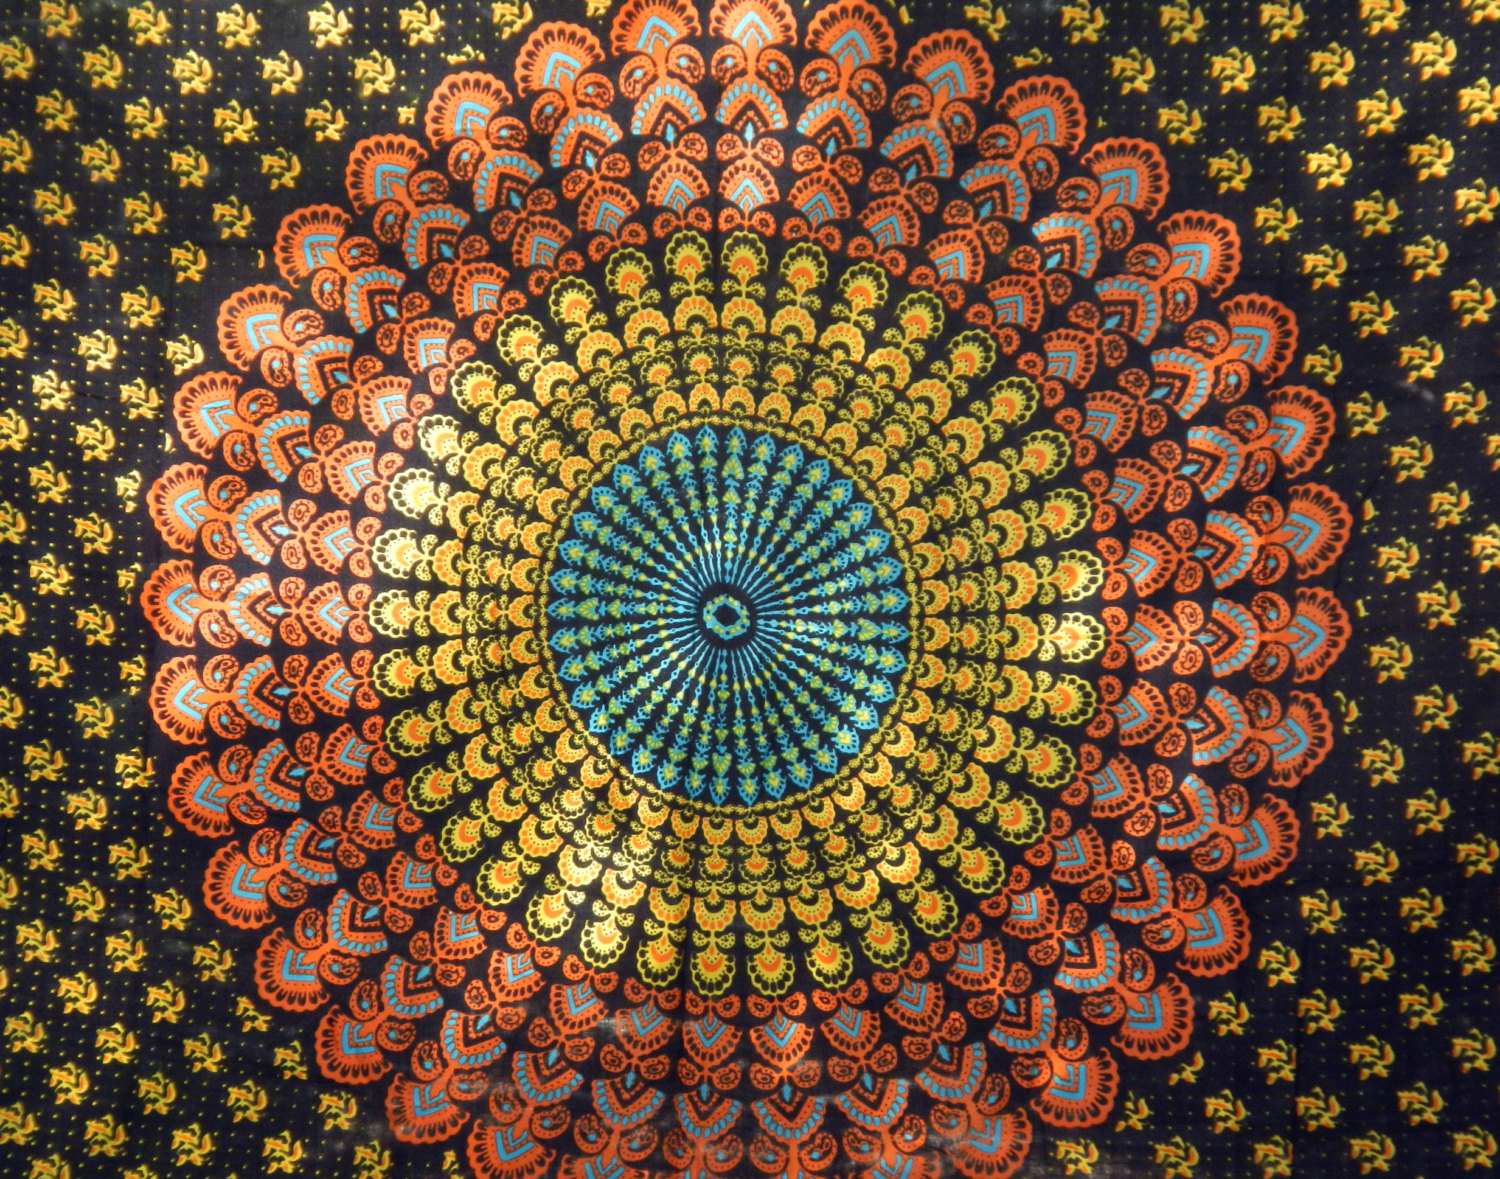 Boho Hippie Tapestry Fabric Colorful By Sticksandstoneshemp1